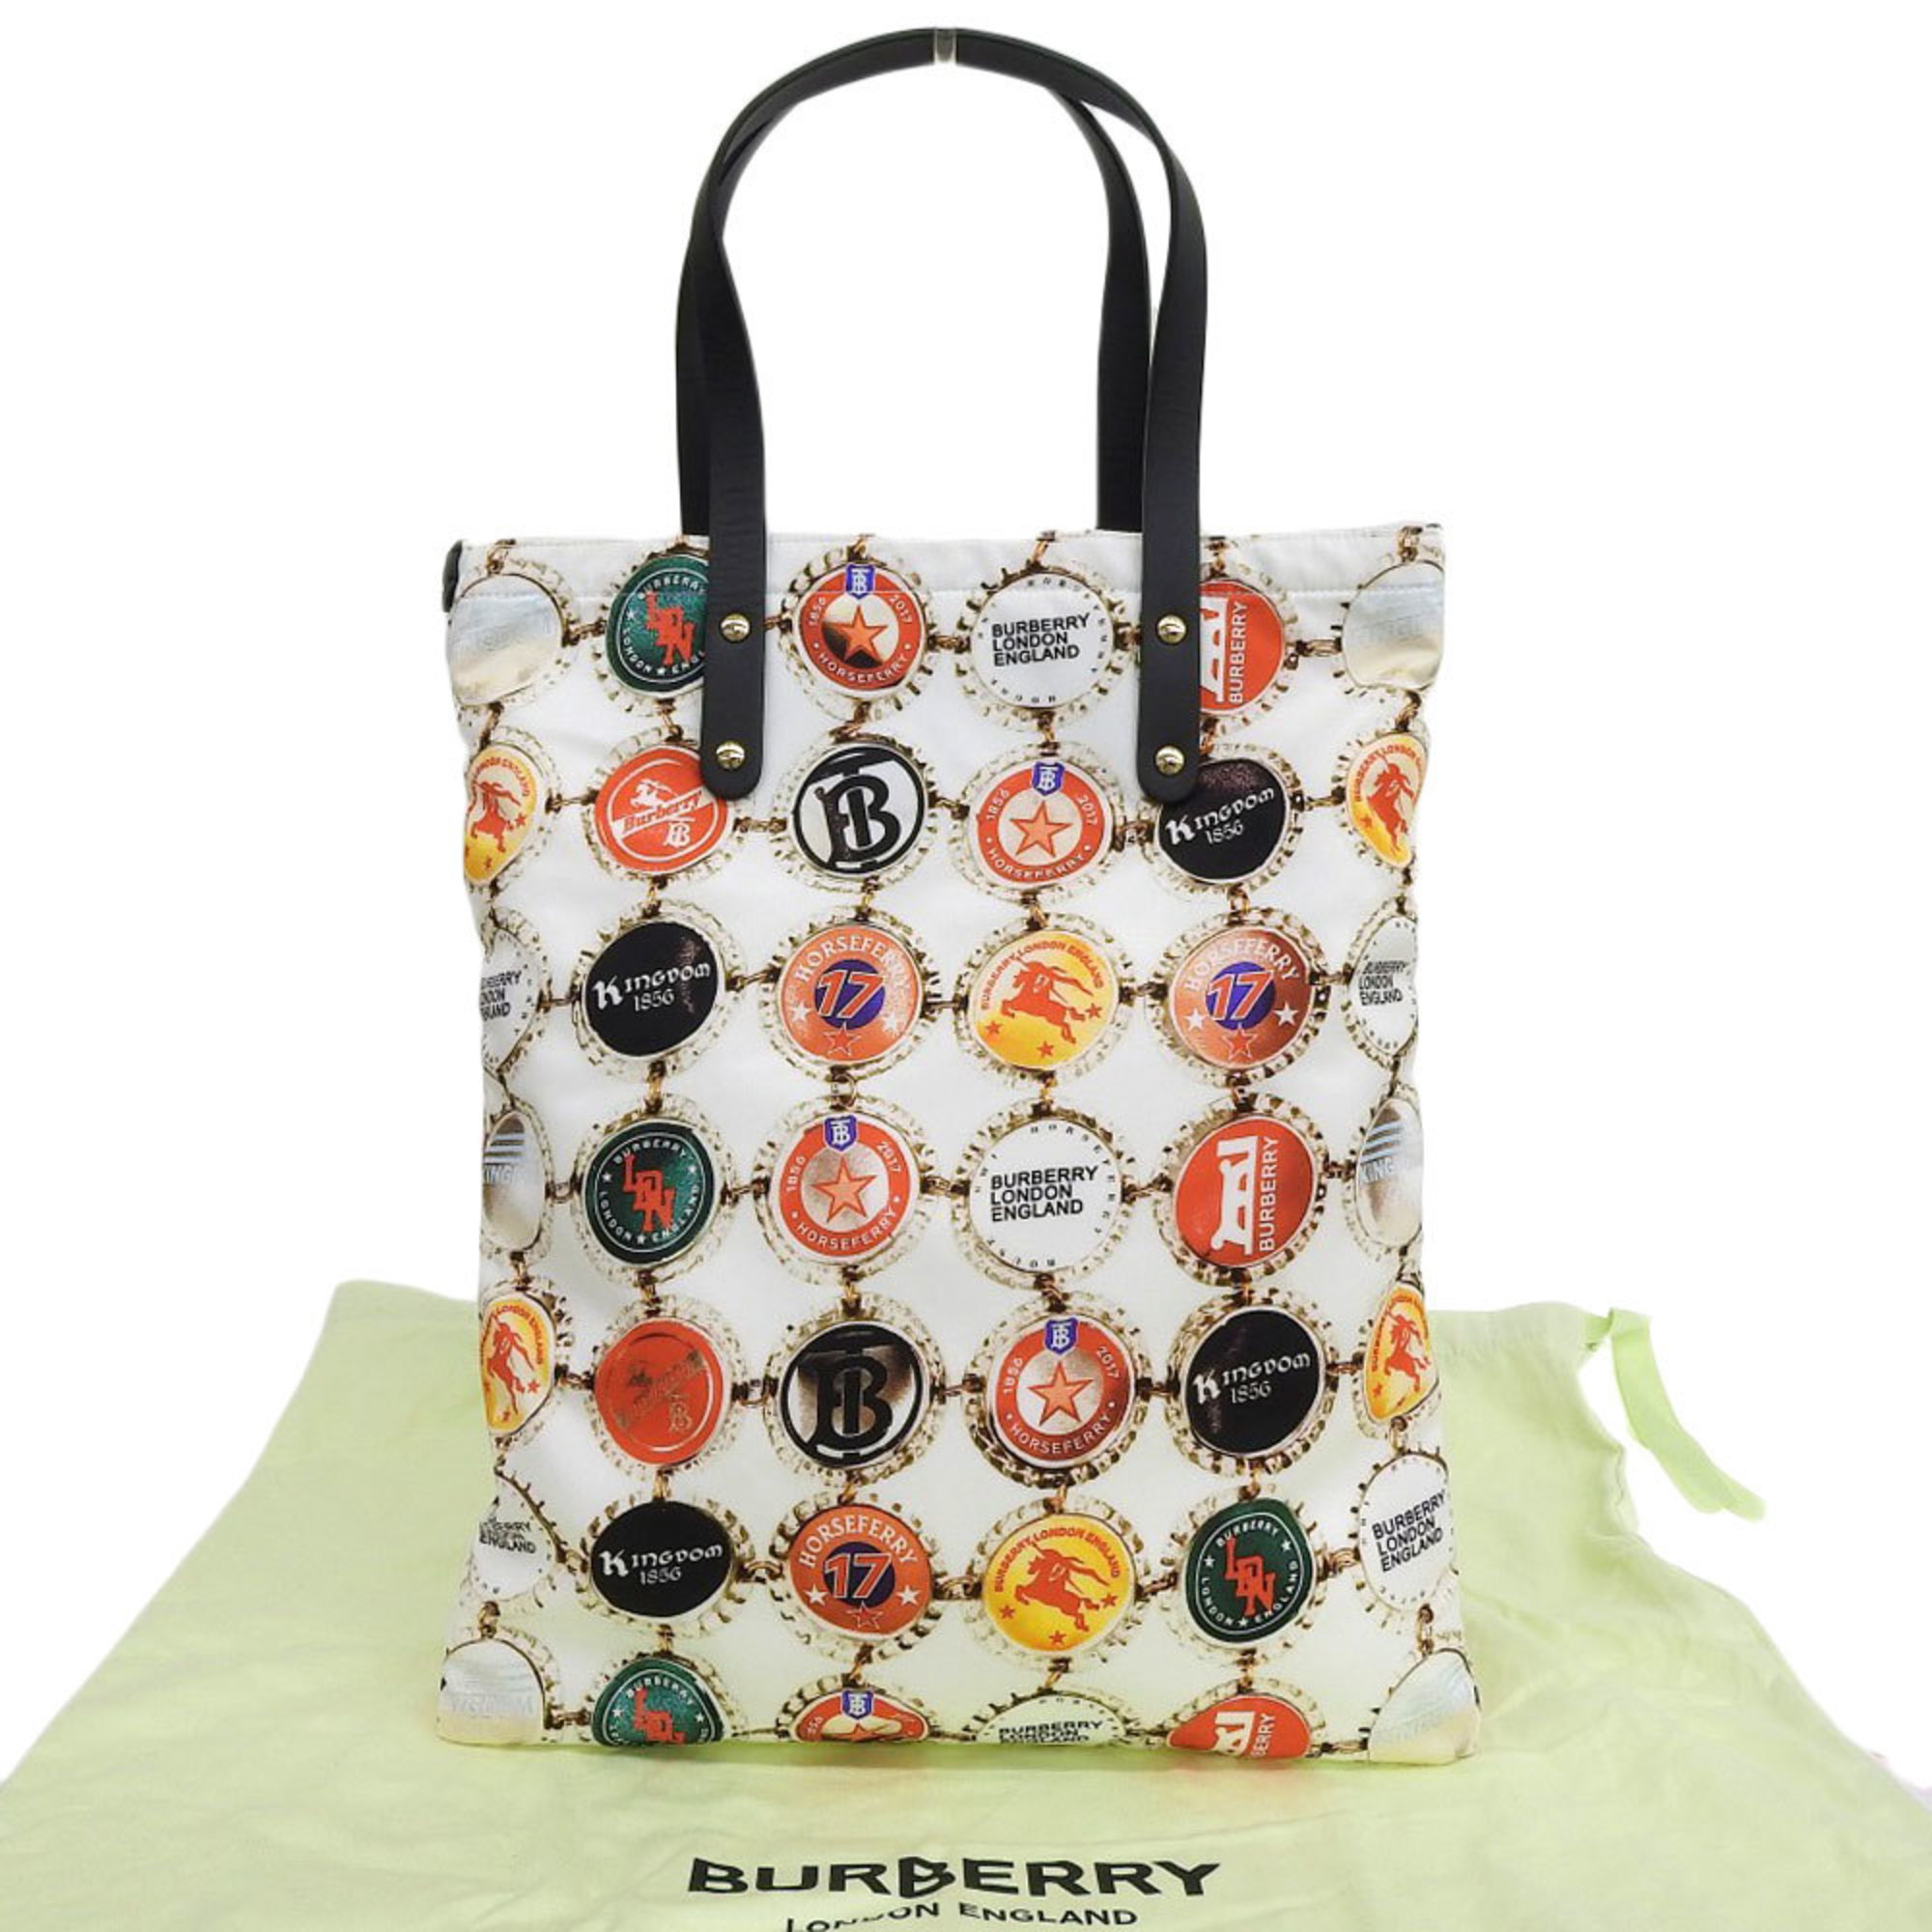 Burberry BURBERRY bottle cap pattern tote bag handbag nylon multicolor 8022365